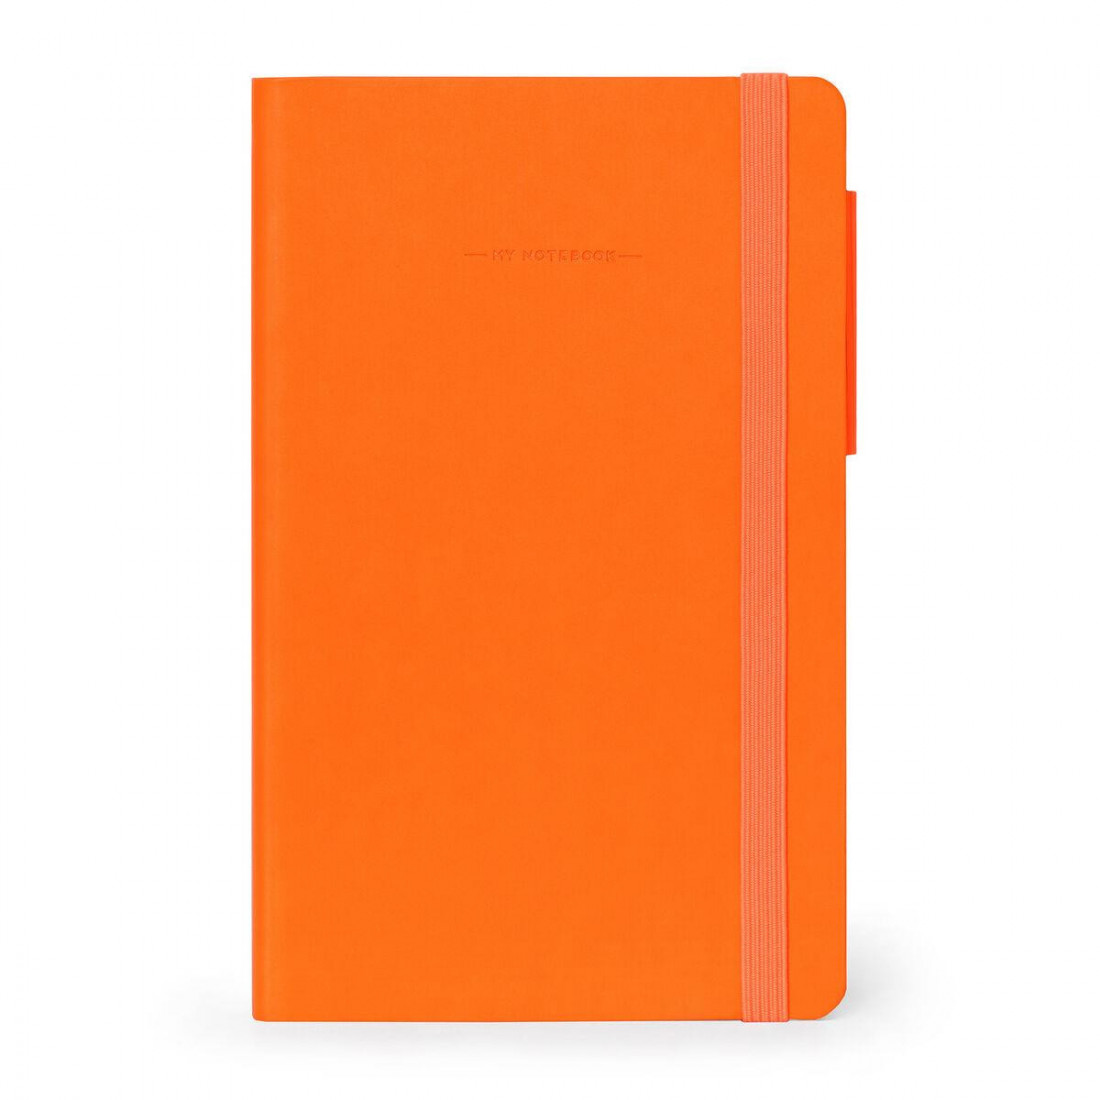 My Notebook - Lined - Medium - Neon Orange Cover LEGAMI